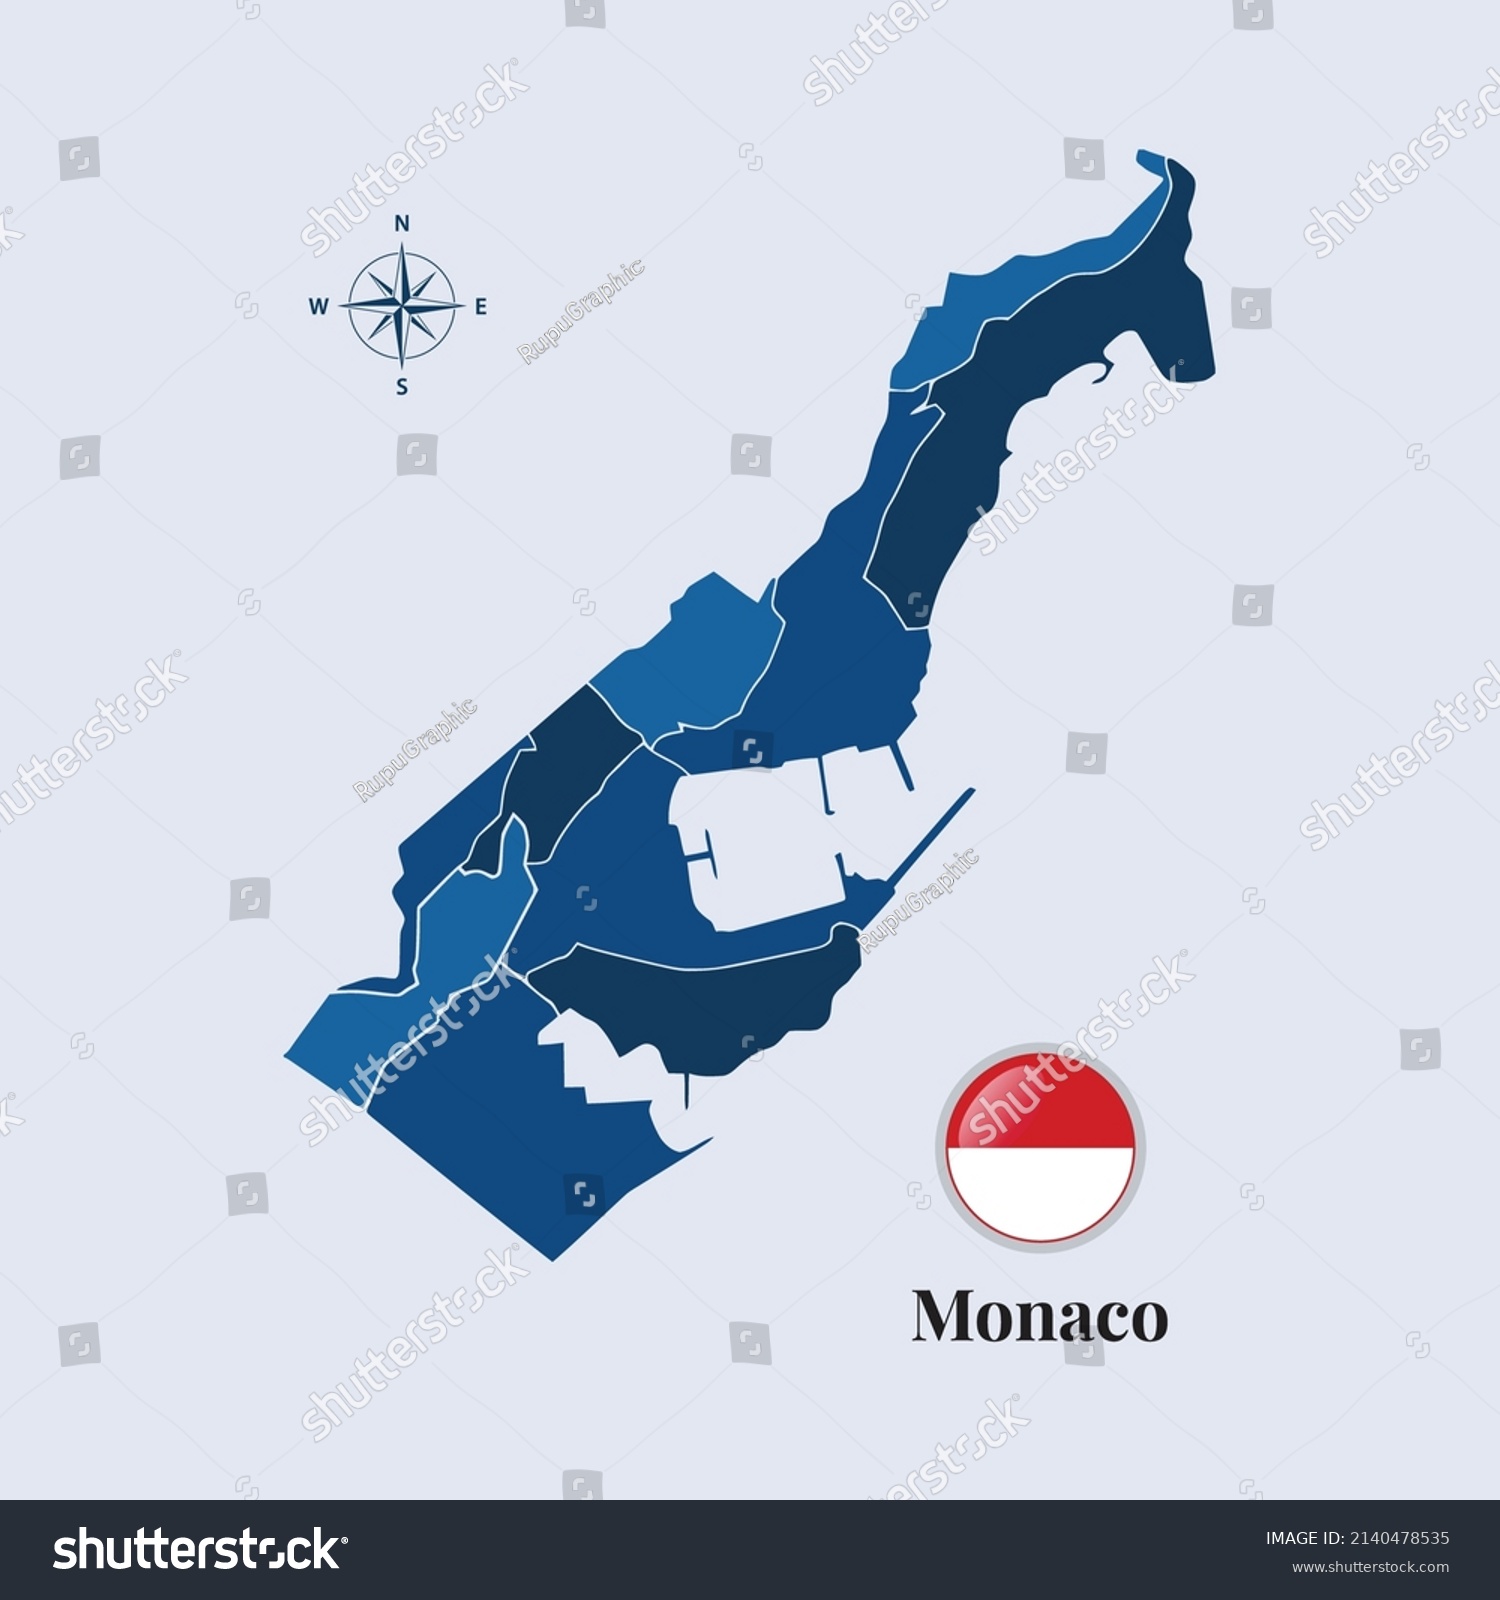 Monaco Vector Map And Flag Flag Map Of Monaco Royalty Free Stock